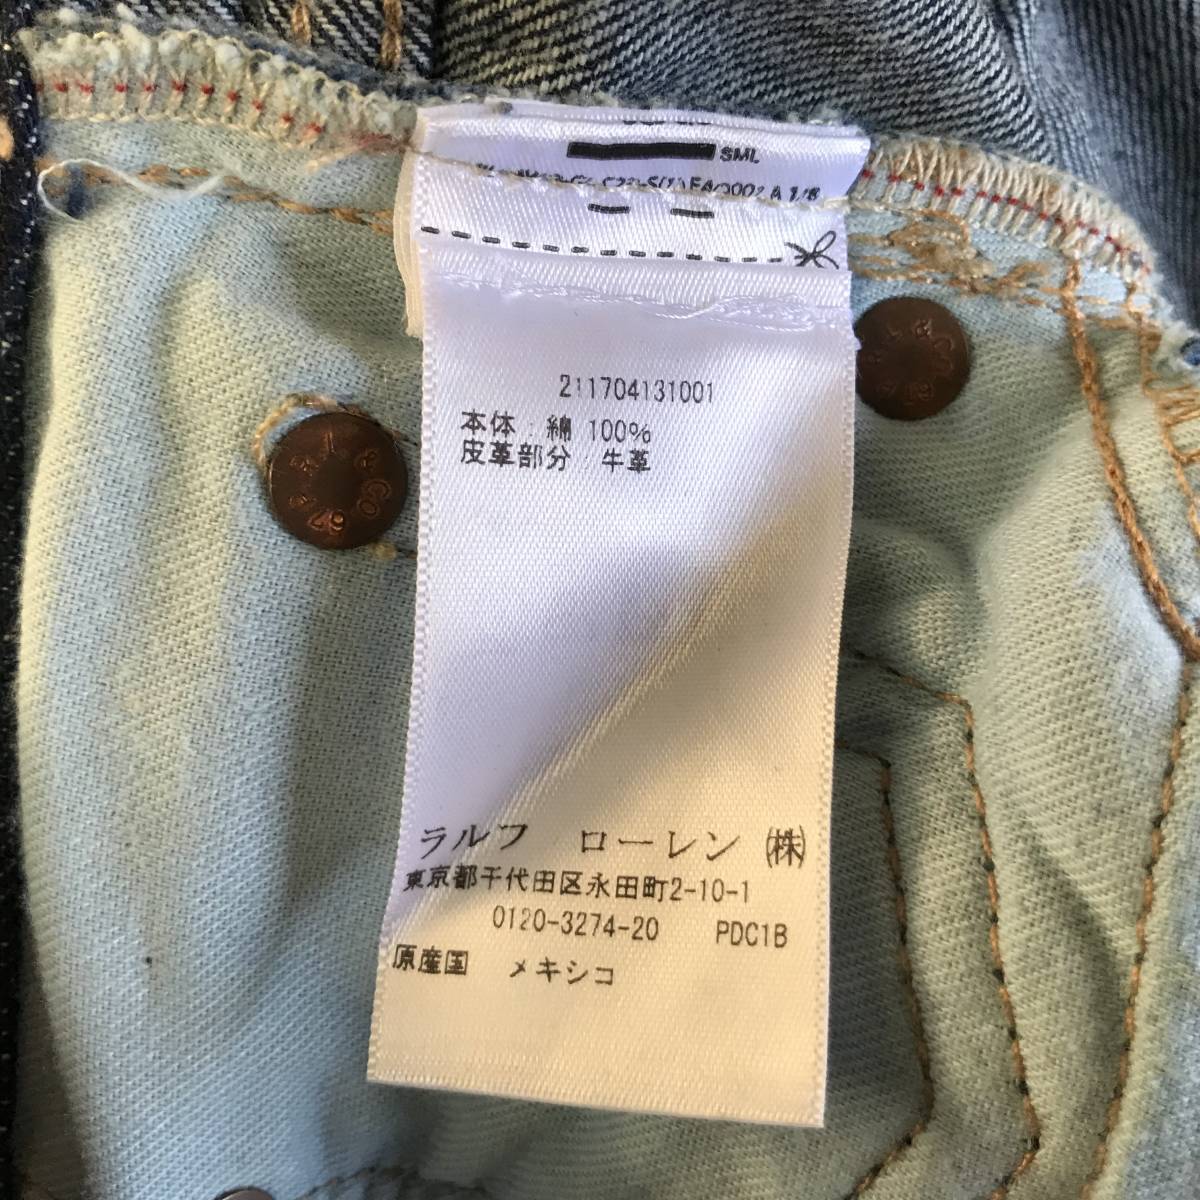 POLO RALPH LAUREN AVERY BOYFRIEND Polo Ralph Lauren lady's remake processing button fly Denim / jeans beautiful goods size 25